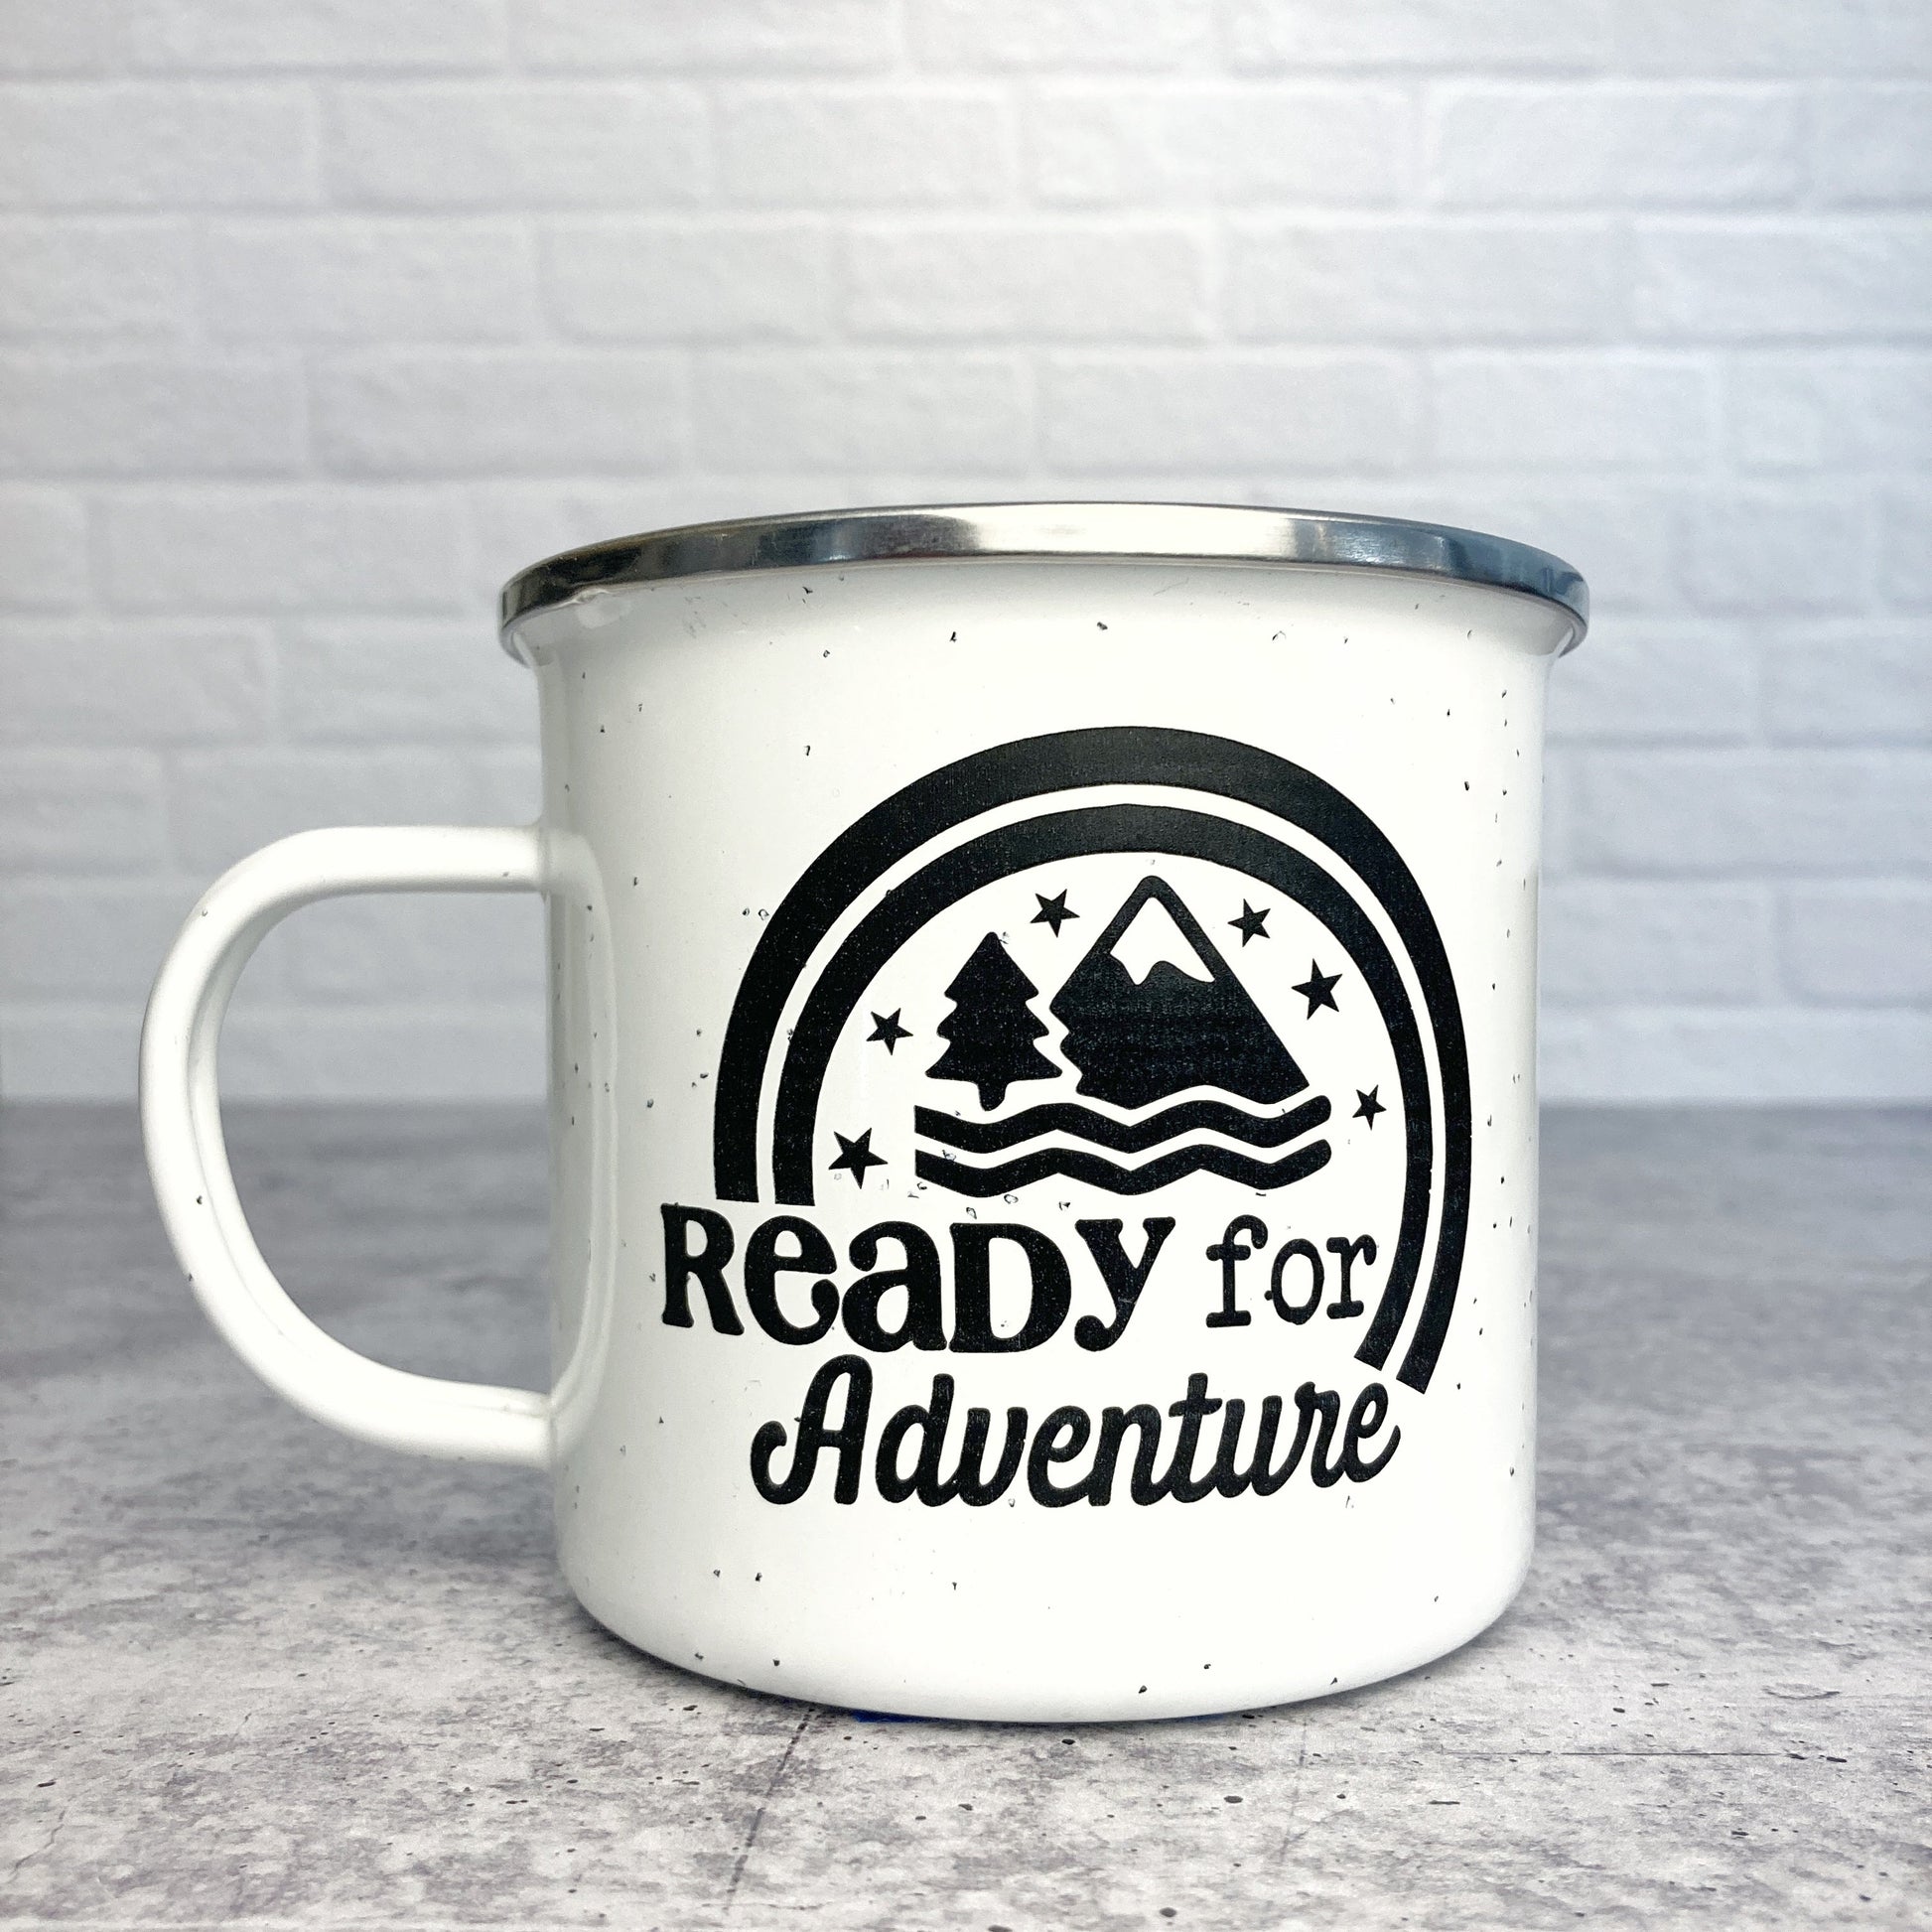 Ready For Adventure Design on a white enamel mug